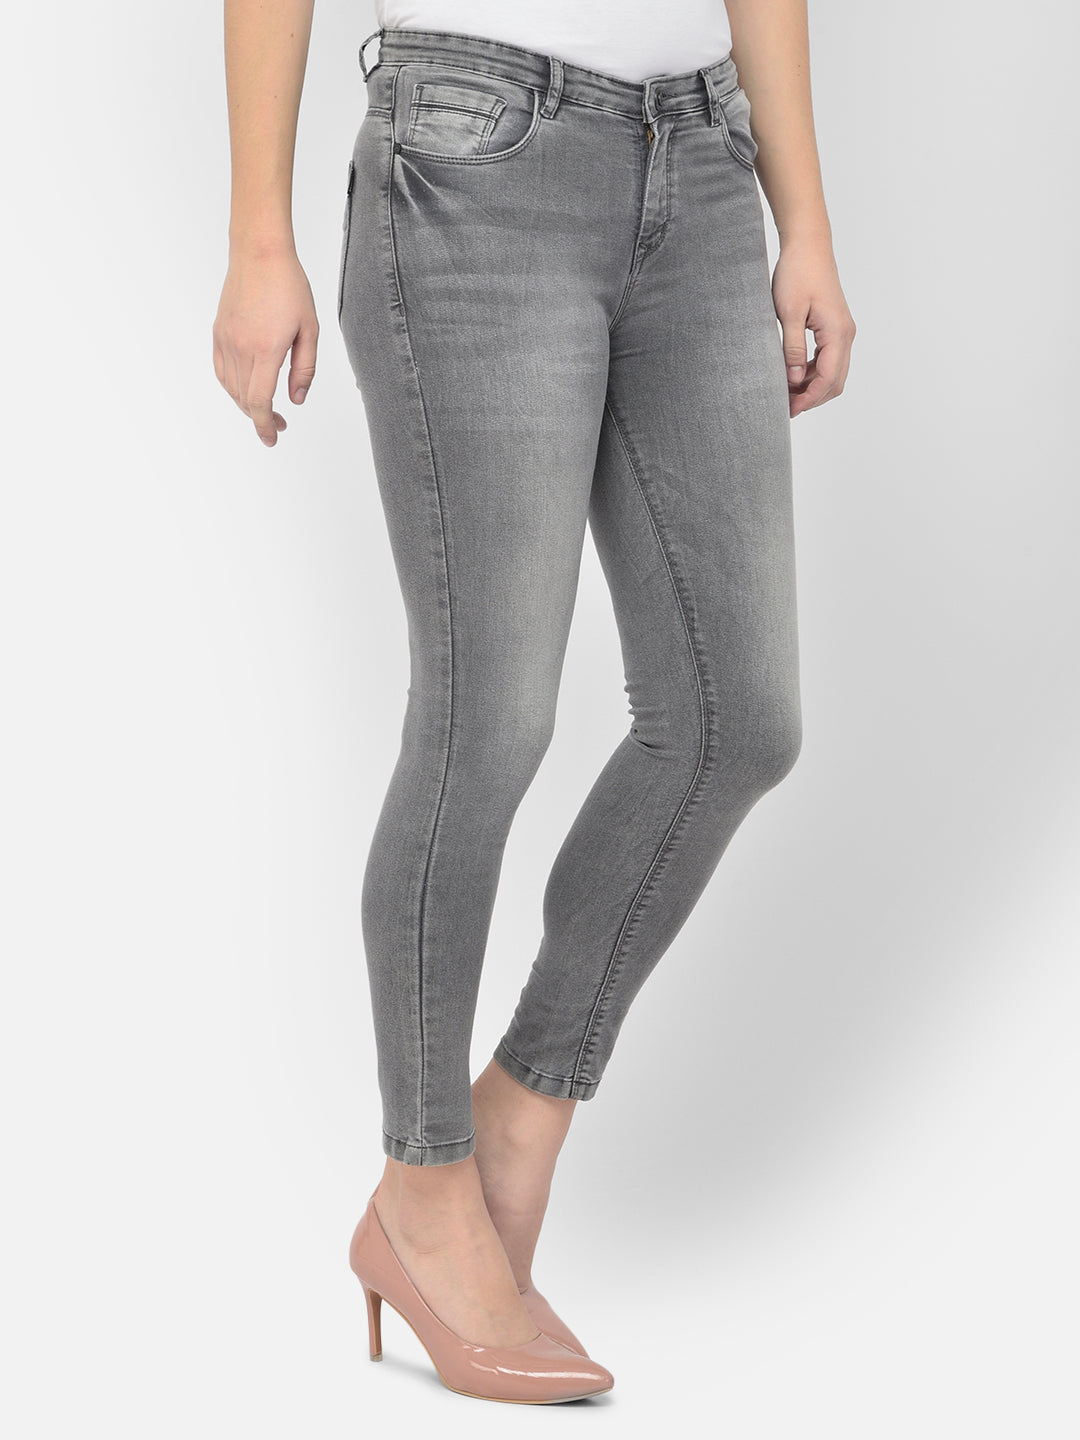 Grey Cropped Jeans - Women Jeans